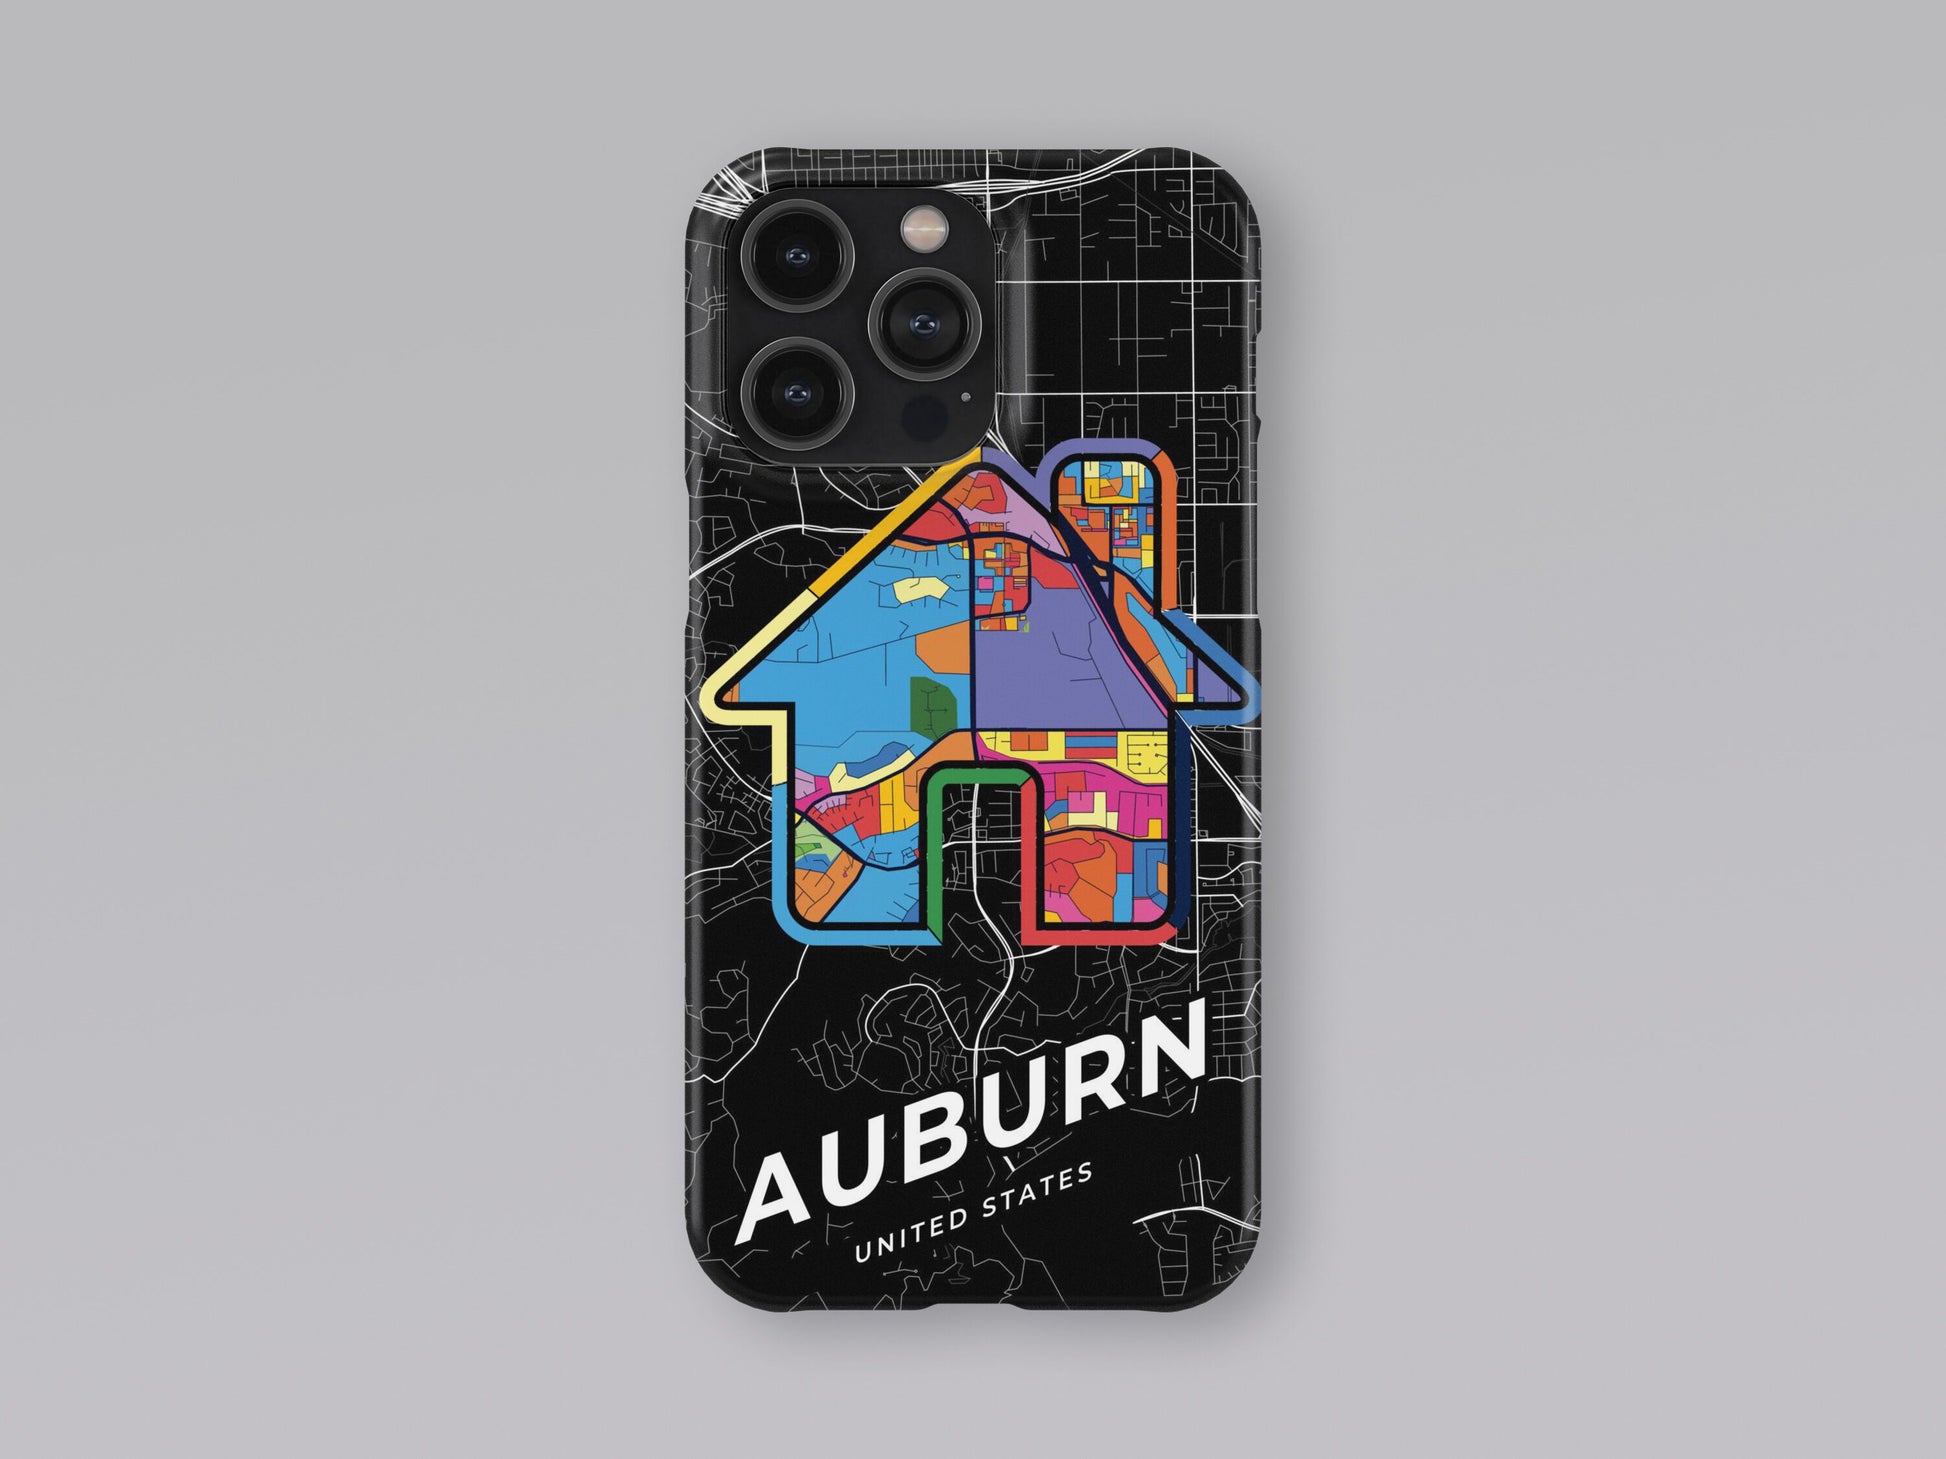 Auburn Washington slim phone case with colorful icon. Birthday, wedding or housewarming gift. Couple match cases. 3